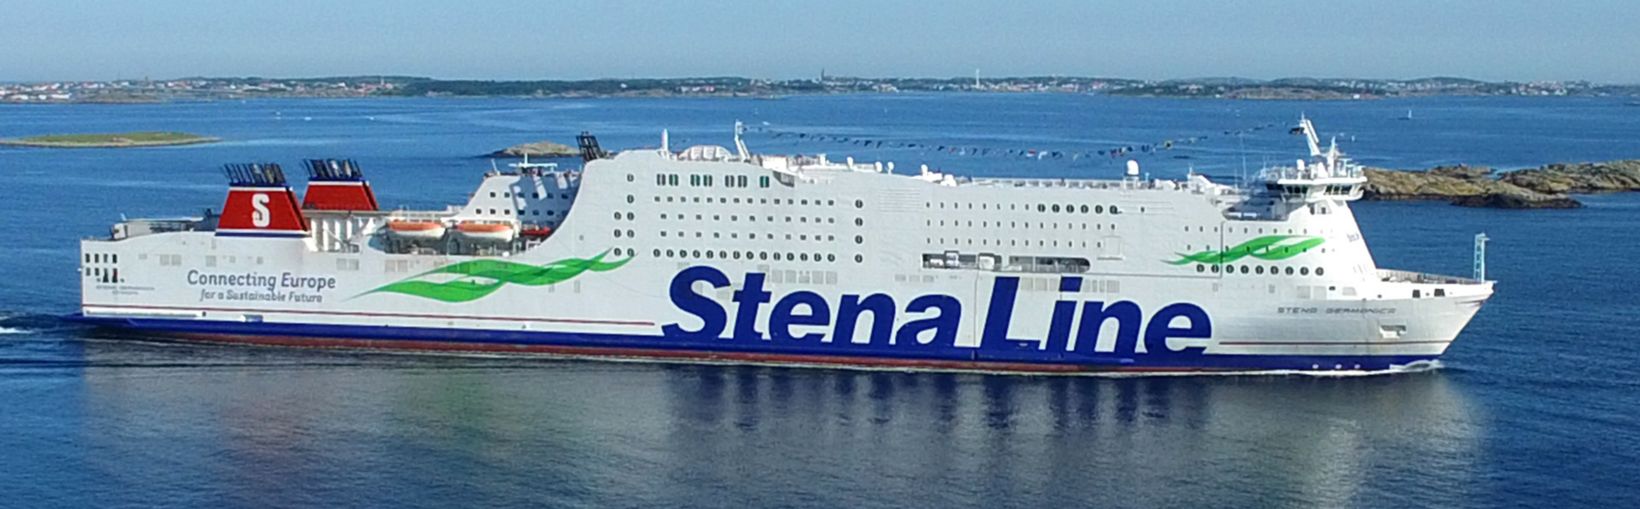 Stena Germanica ferry en mer